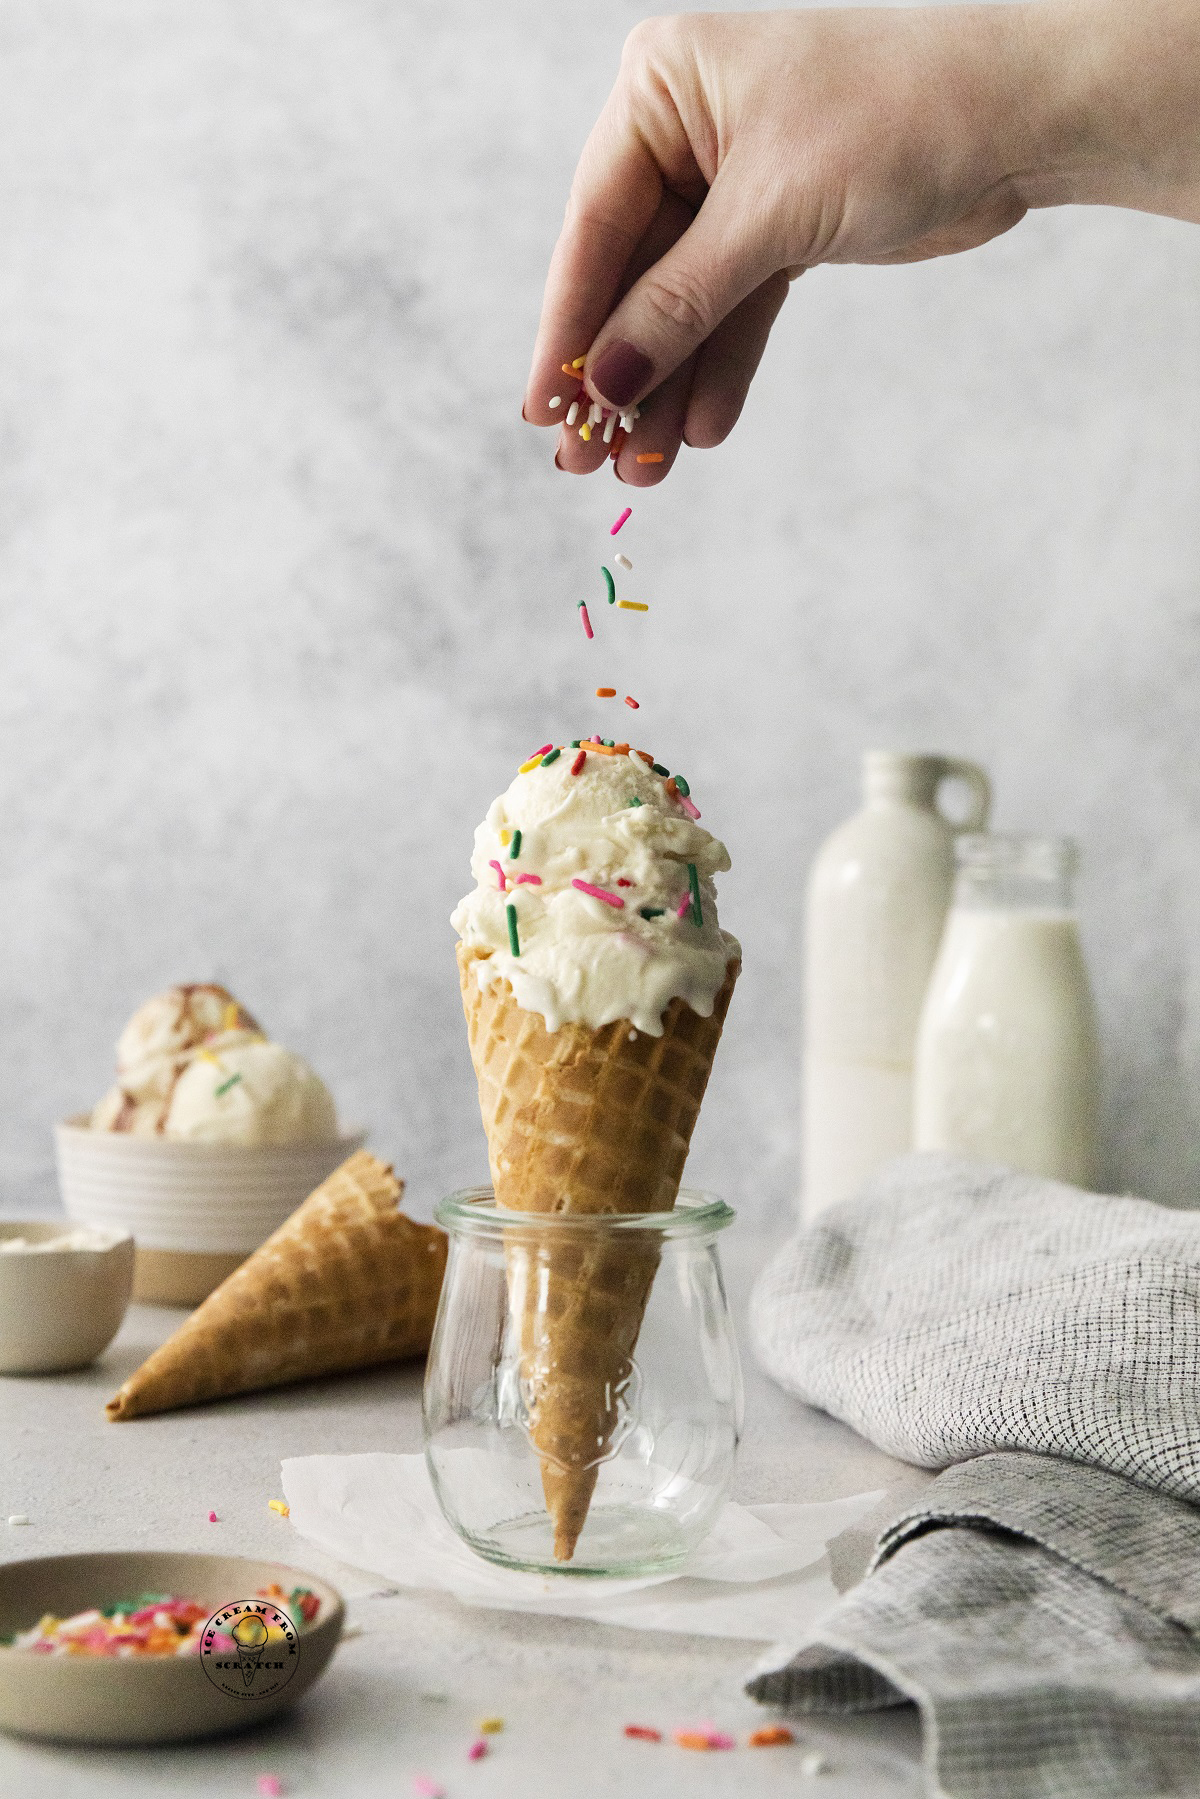 a hand sprinkling sprinkles onto an anabolic ice cream cone